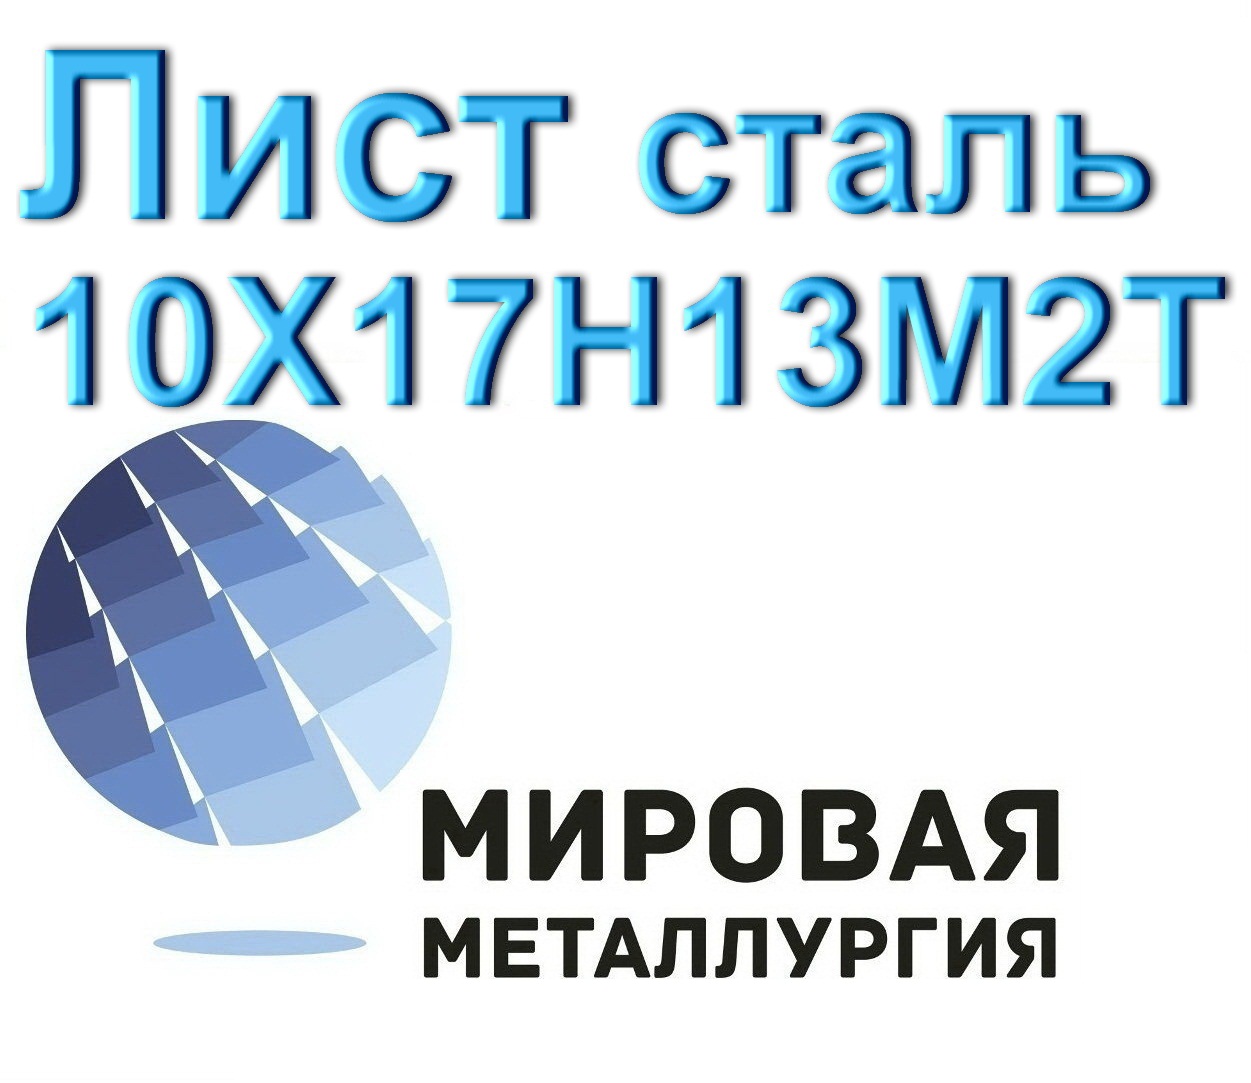 Лист сталь 10Х17Н13М2Т в городе Екатеринбург, фото 1, телефон продавца: +7 (343) 202-21-64